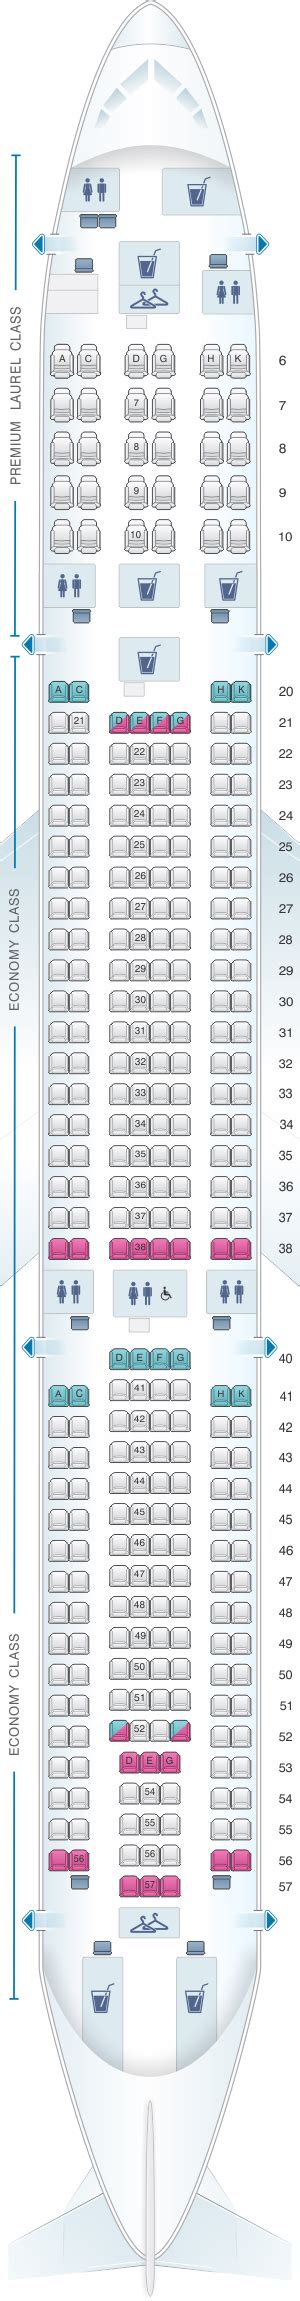 Delta Airbus A330 300 Seat Plan Elcho Table